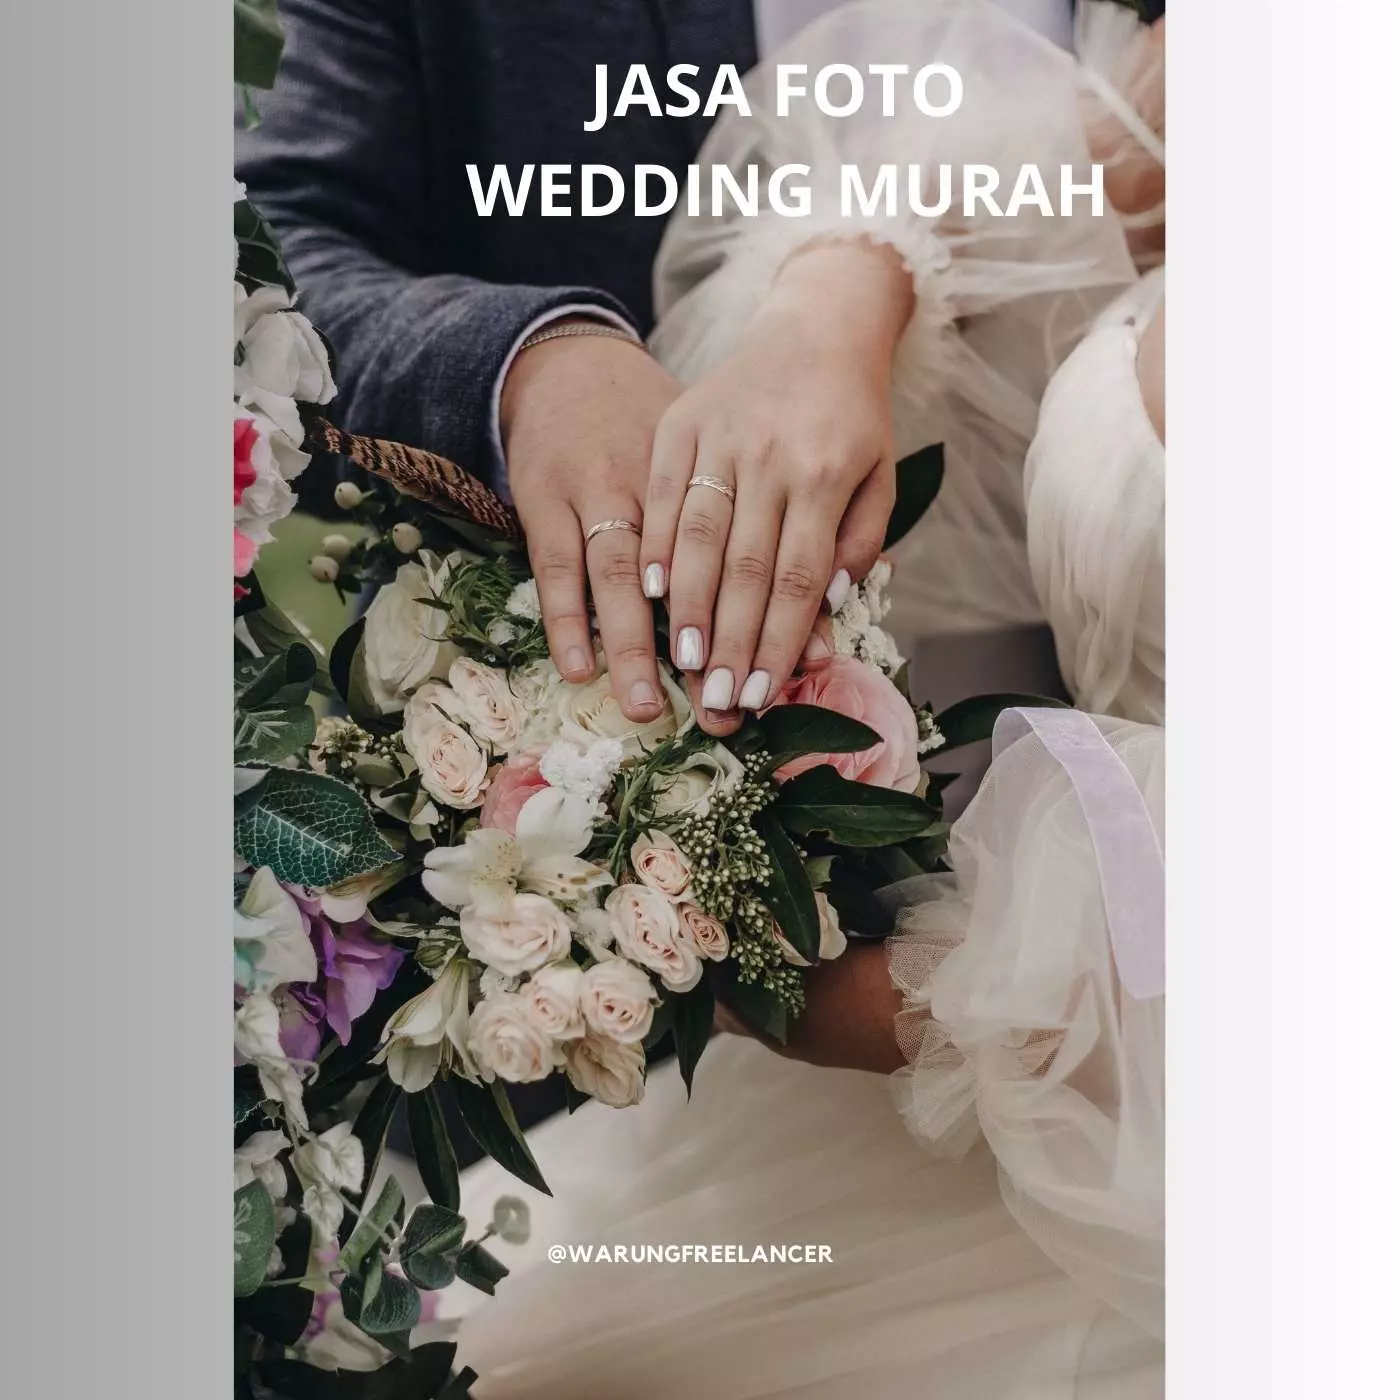 Jasa Foto Wedding Murah